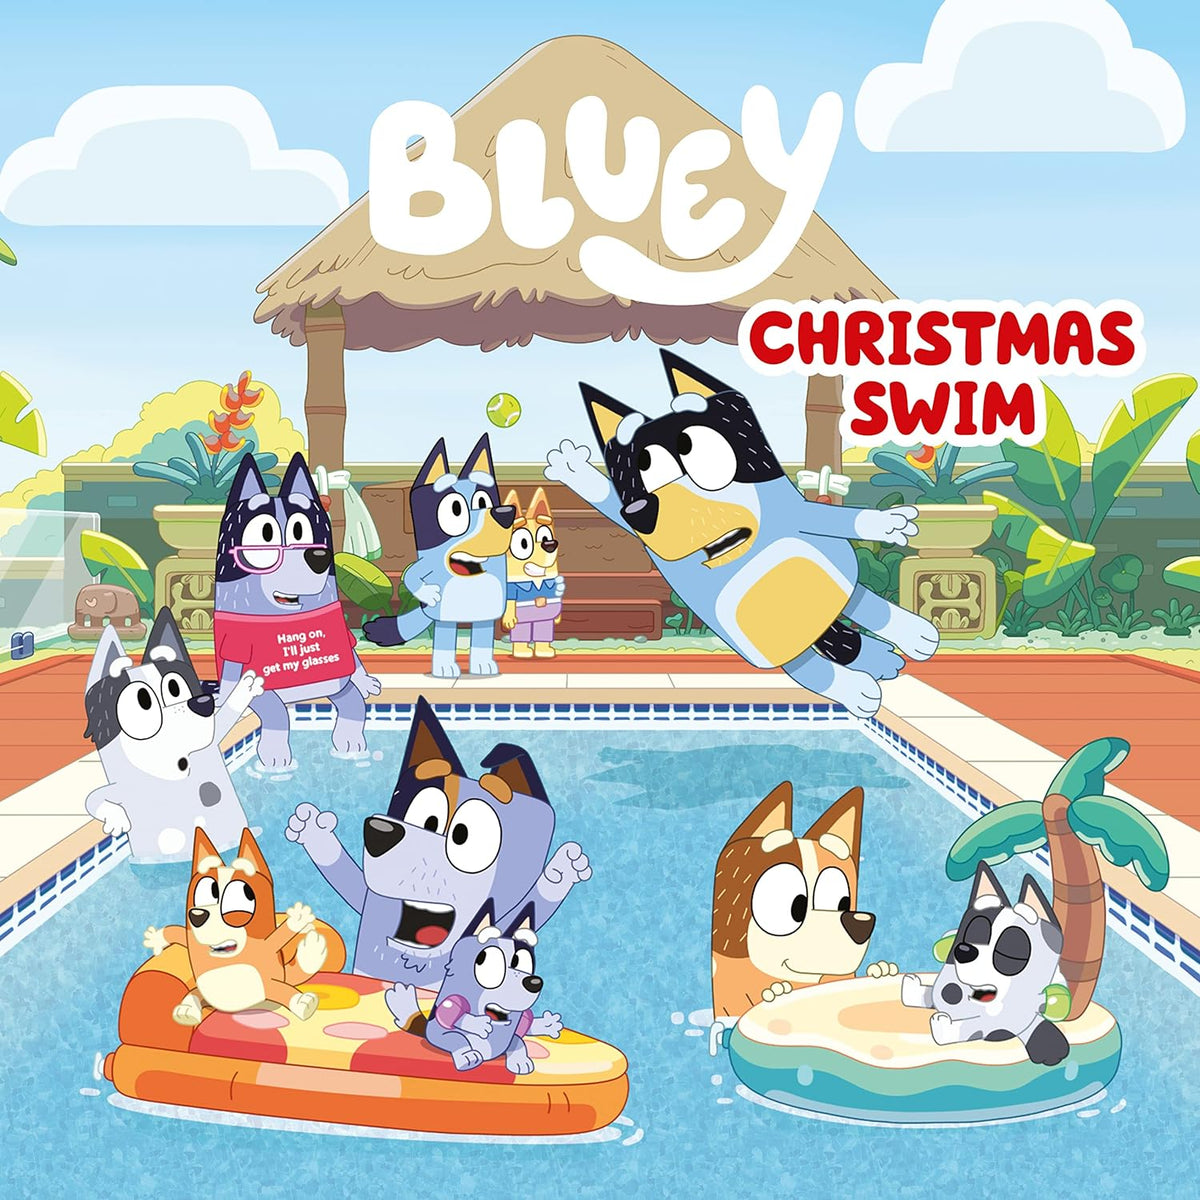 Bluey Christmas Swim